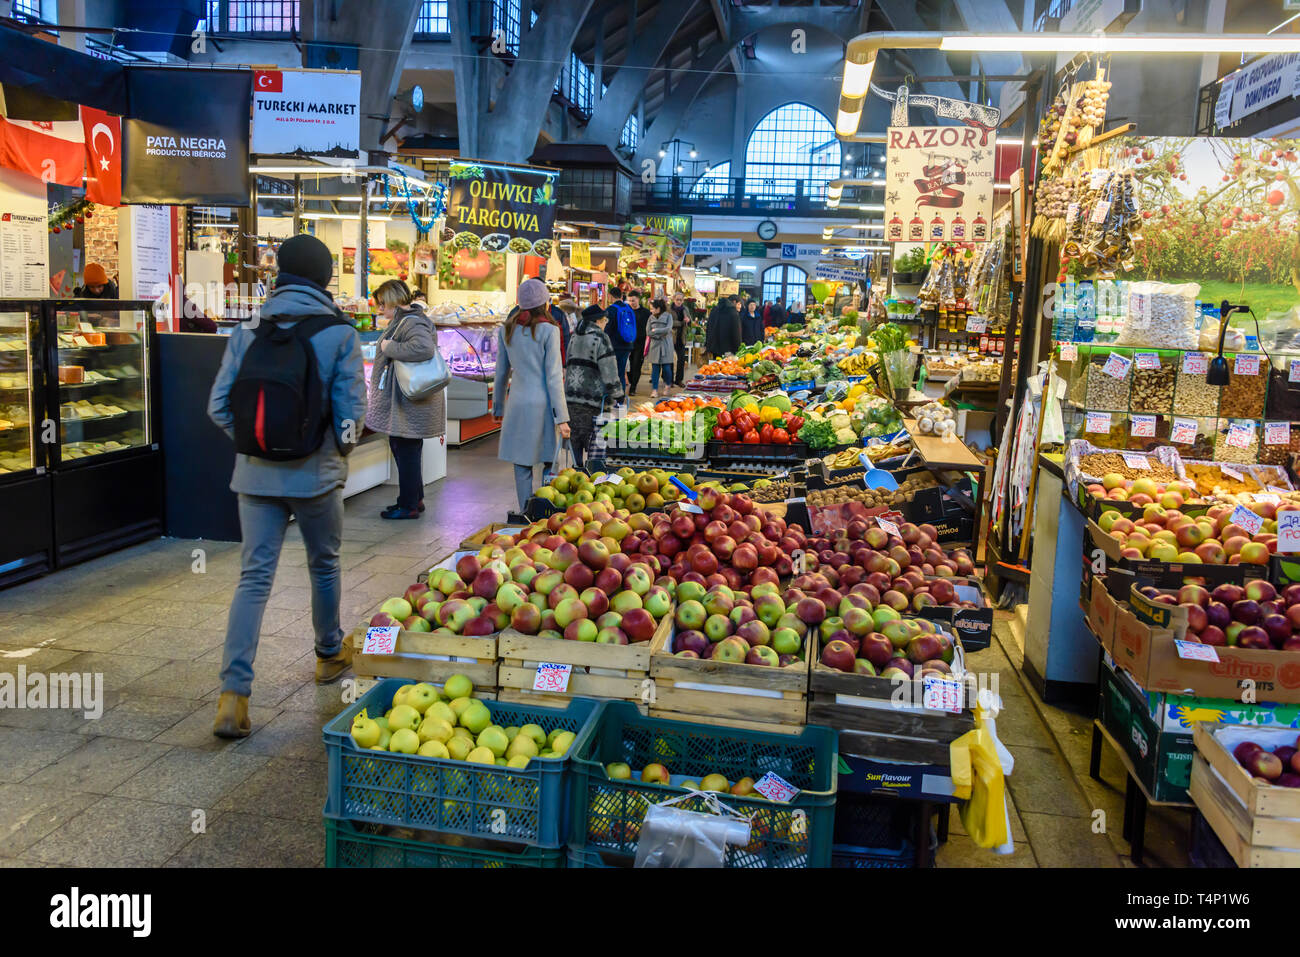 Hala Targowa indoor fruit and vegetable market, Wrocław, Wroclaw, Wroklaw, Poland Stock Photo